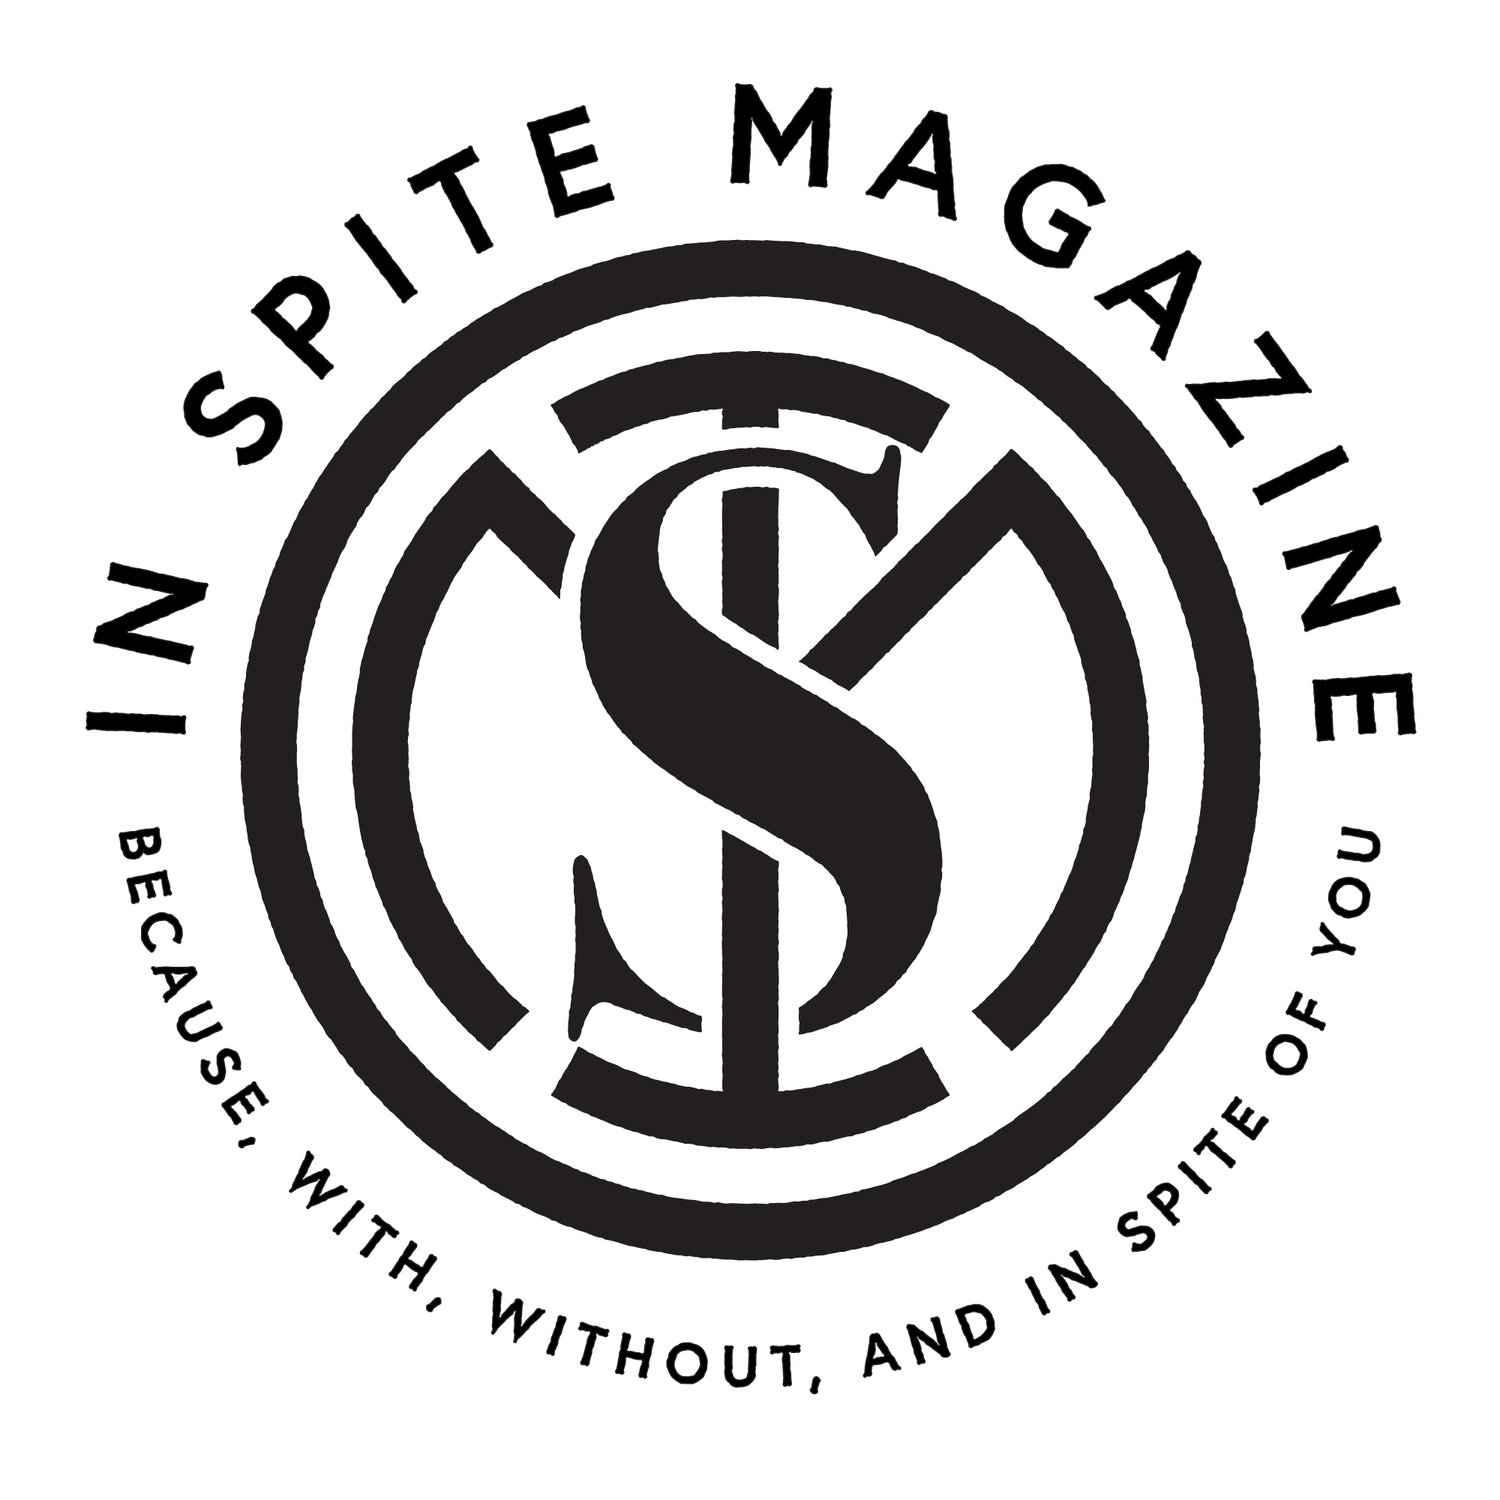 In Spite Magazine